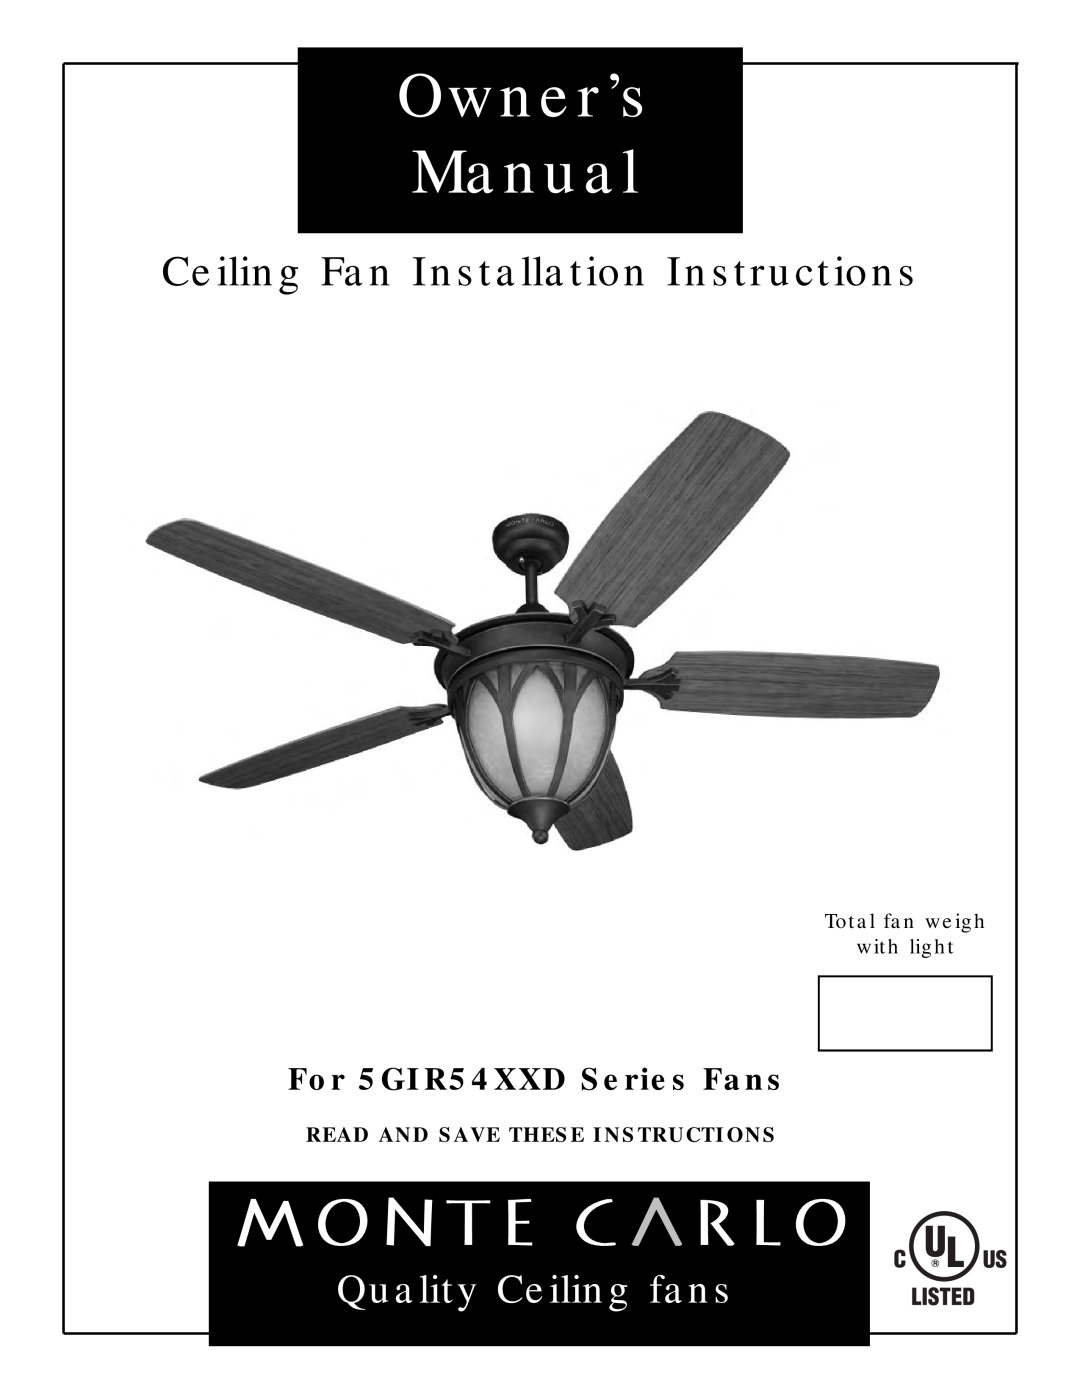 Monte Carlo Fan Company 5GIR54XXD owner manual Ceiling Fan Installation Instructions, Quality Ceiling fans 